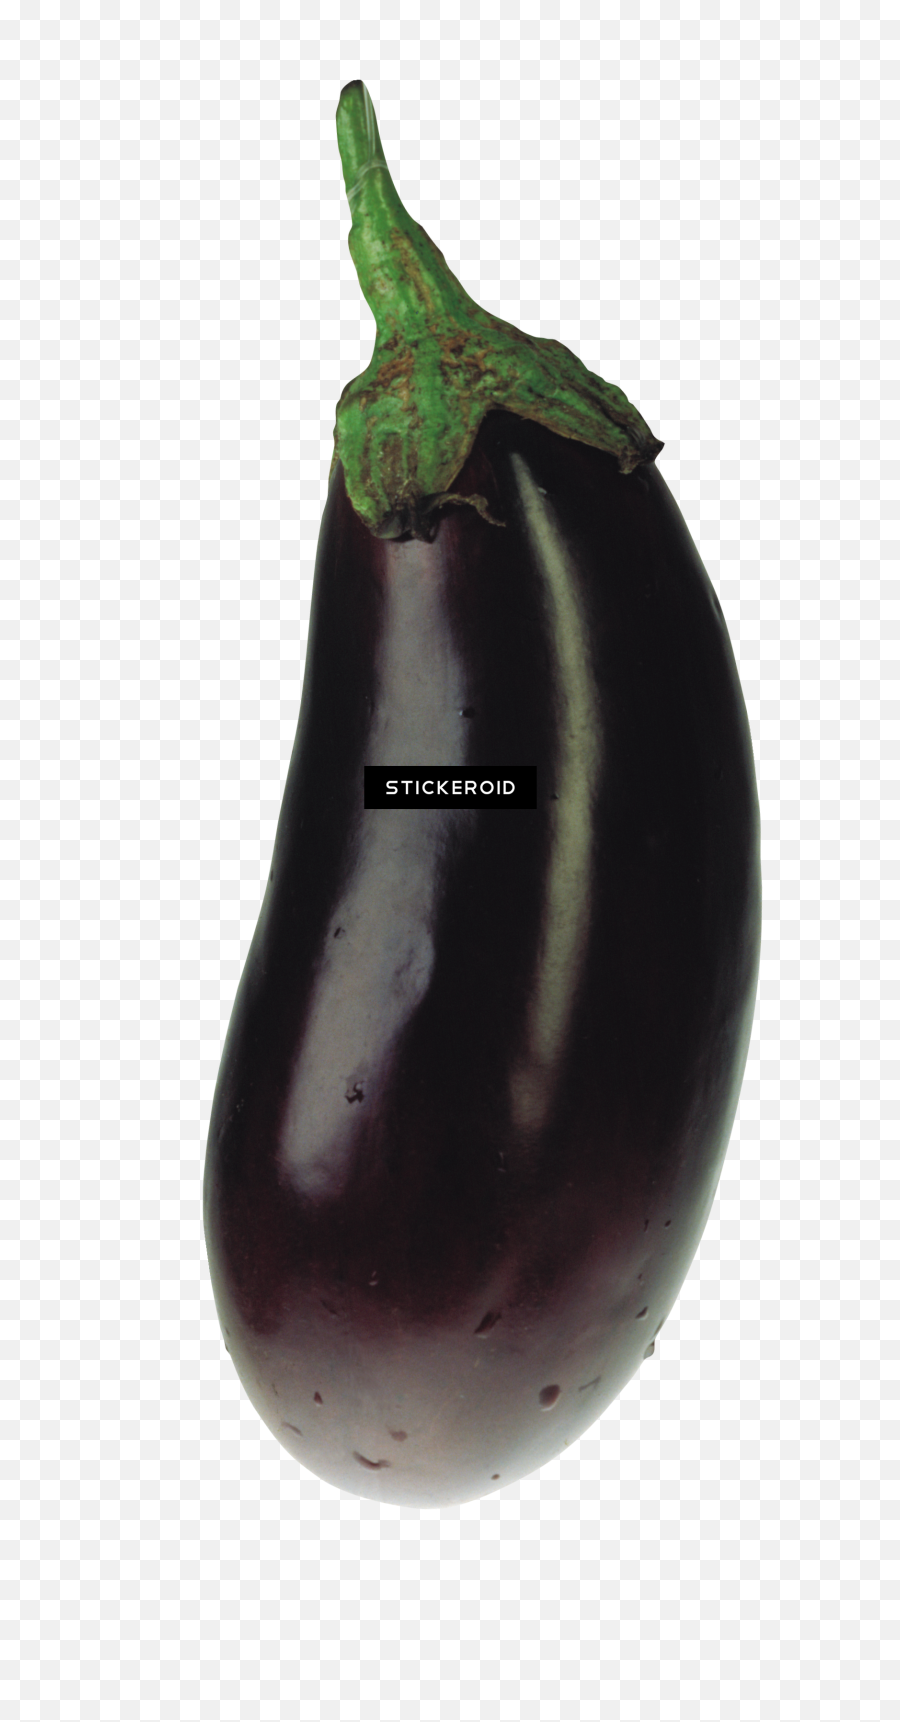 Download Eggplants Eggplant - Eggplant Full Size Png Image Eggplant,Eggplant Transparent Background